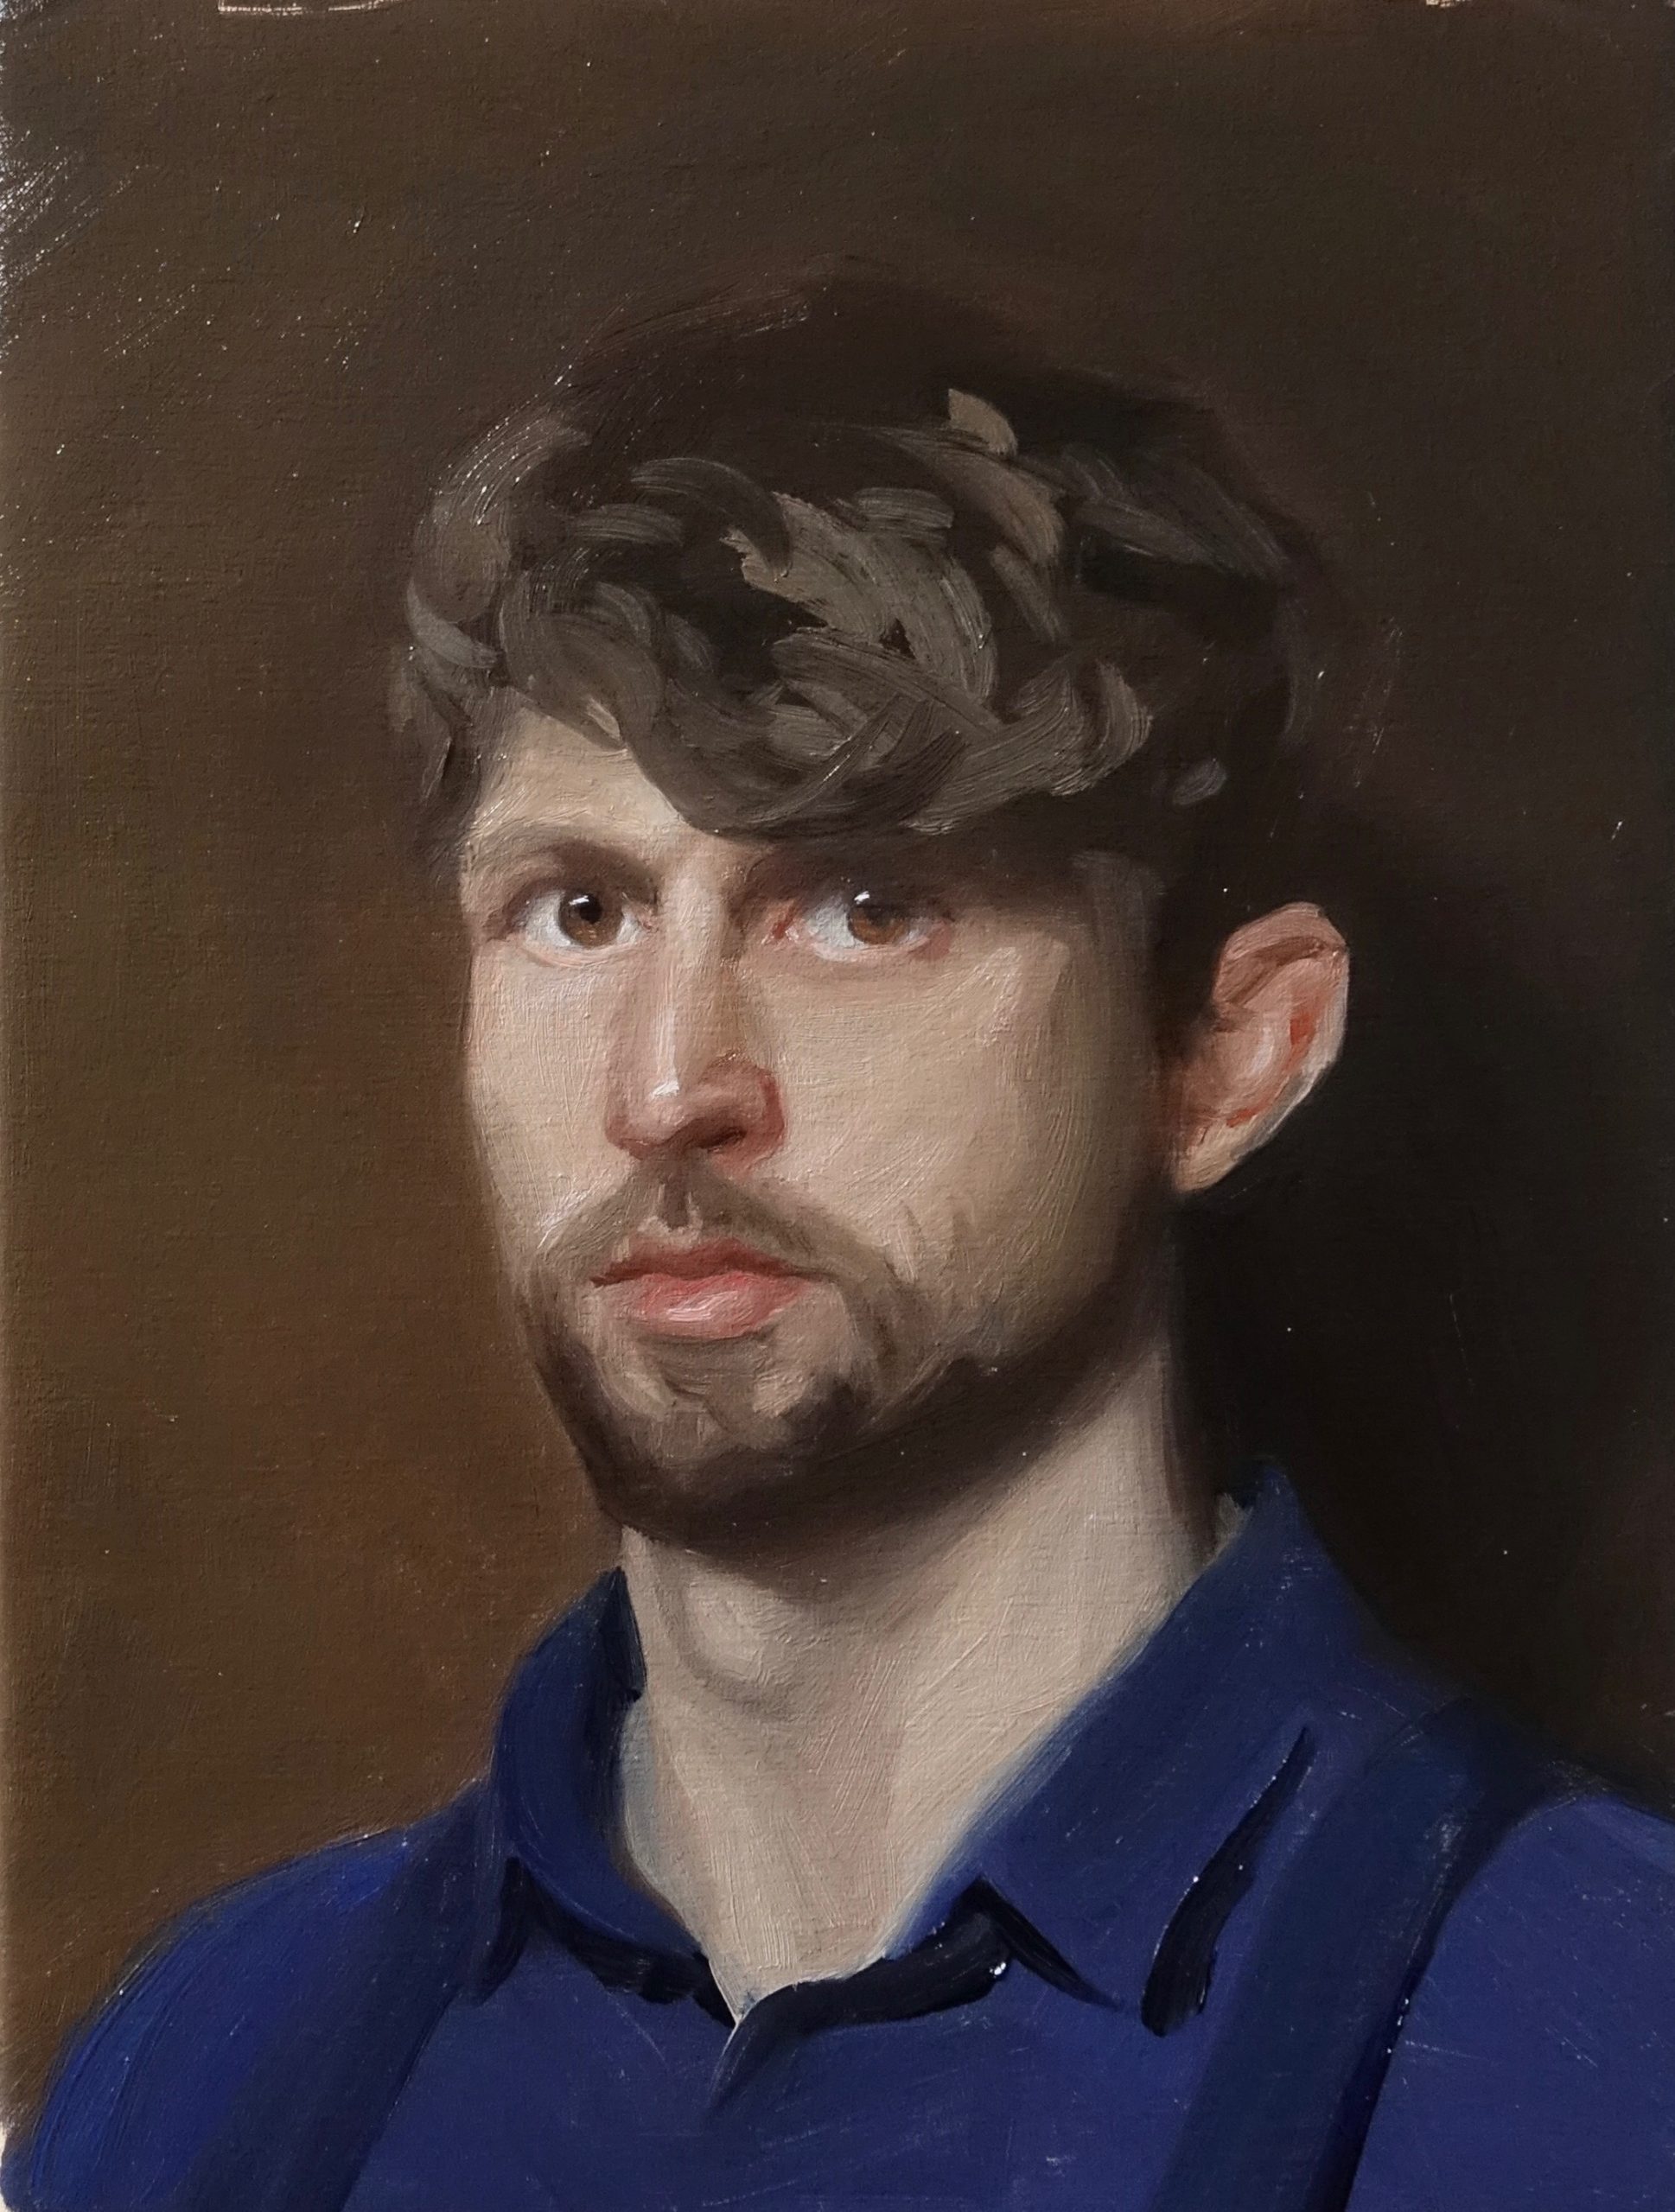 Self portrait in oils on canvas b yDaniel James Yeomans, Wales